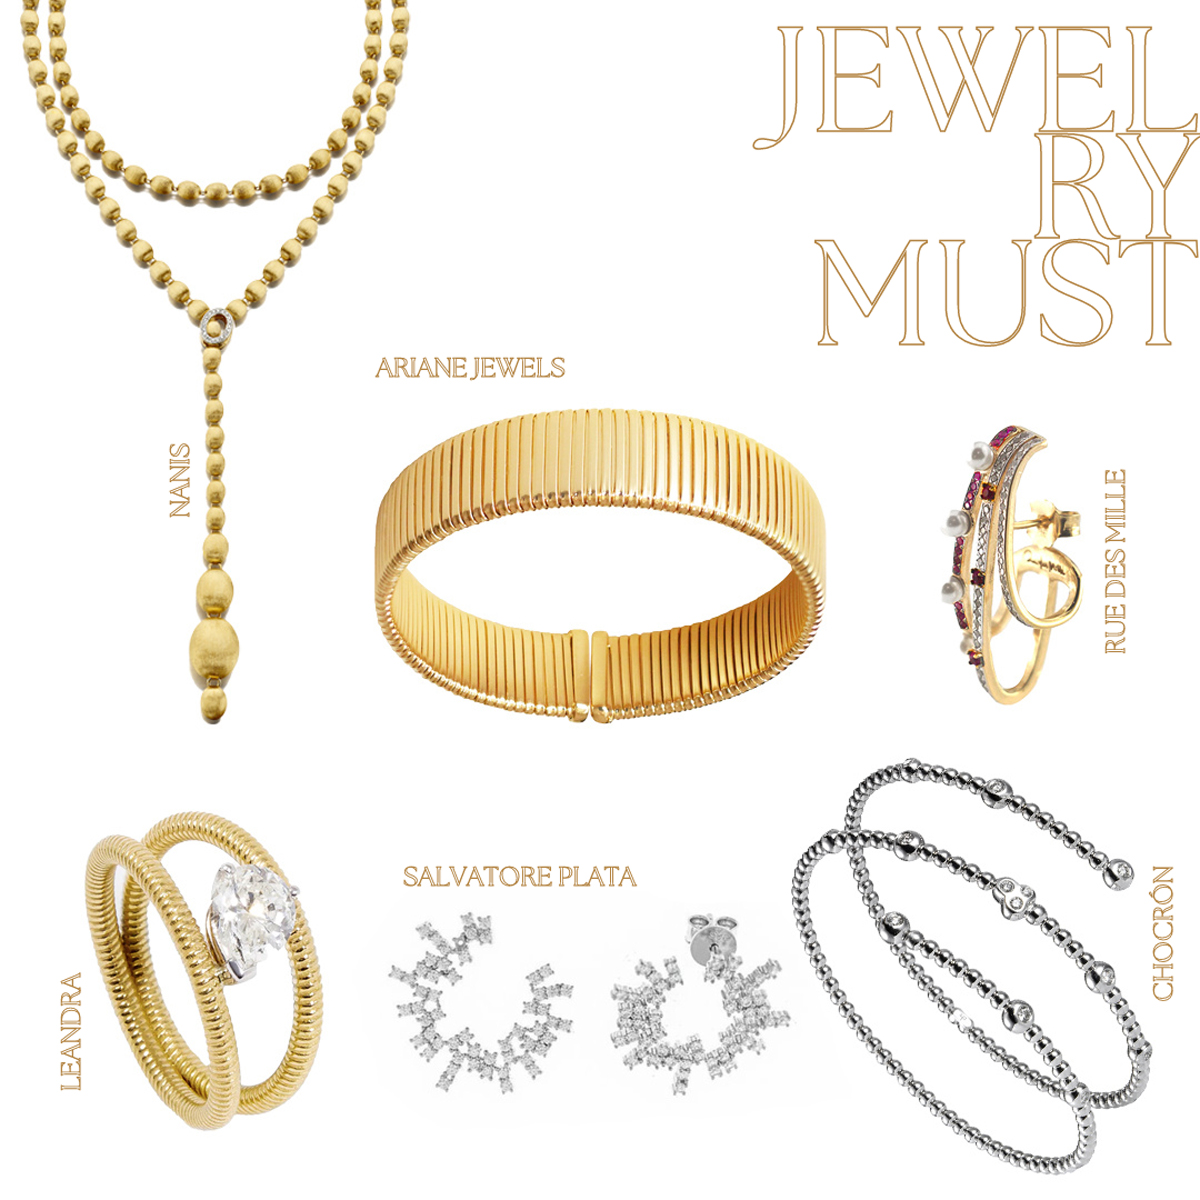 Jewelry Must